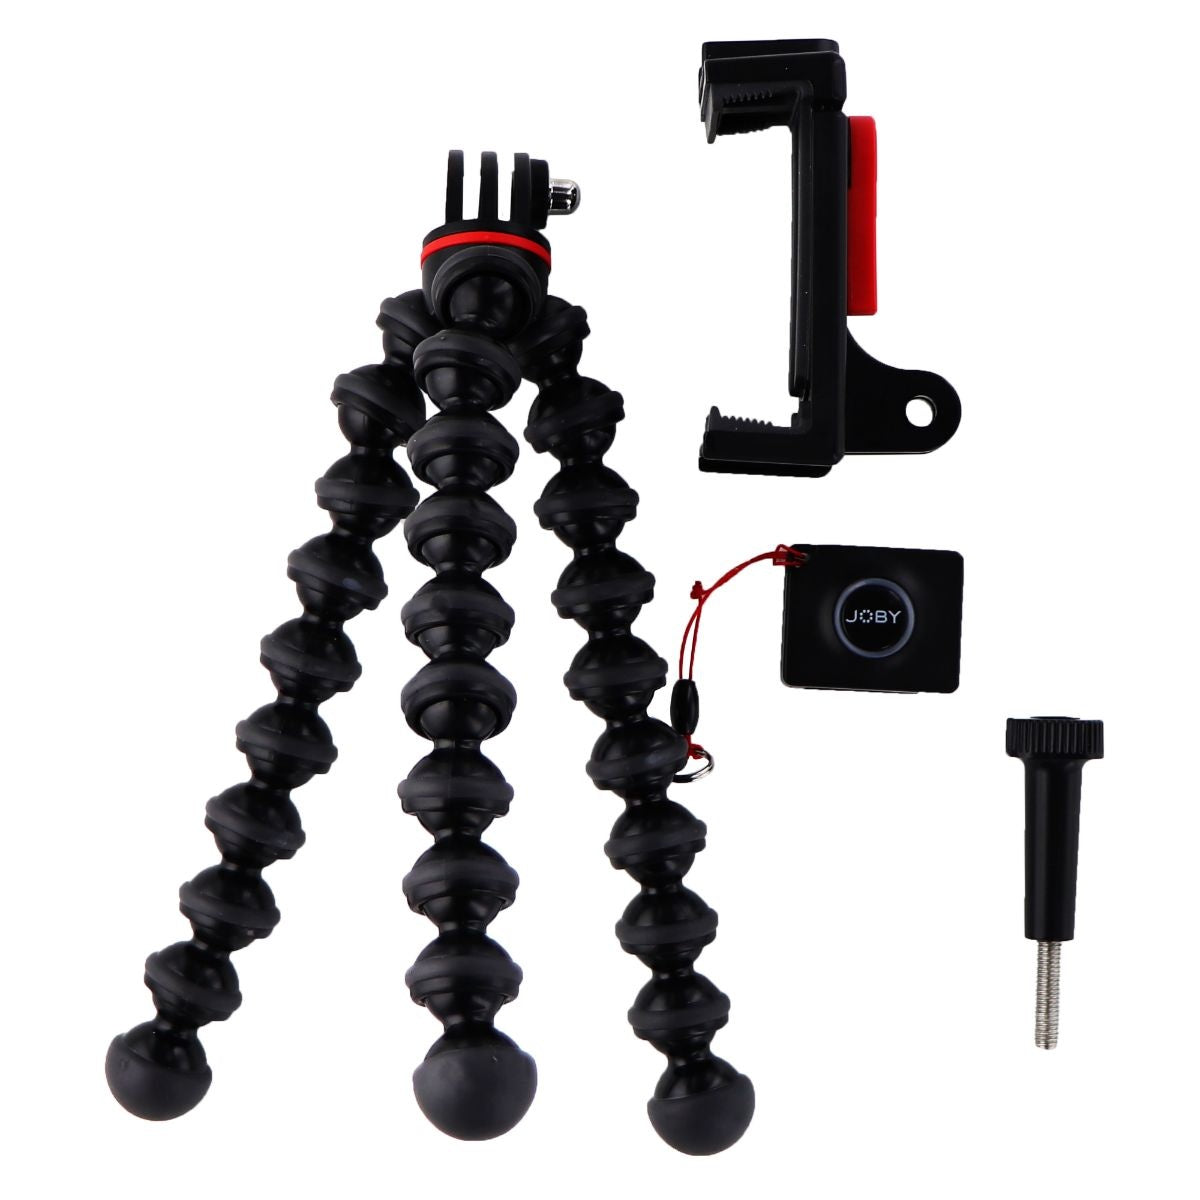 Joby GripTight Action Kit for Smartphones & Action Cameras - Black - JB01515